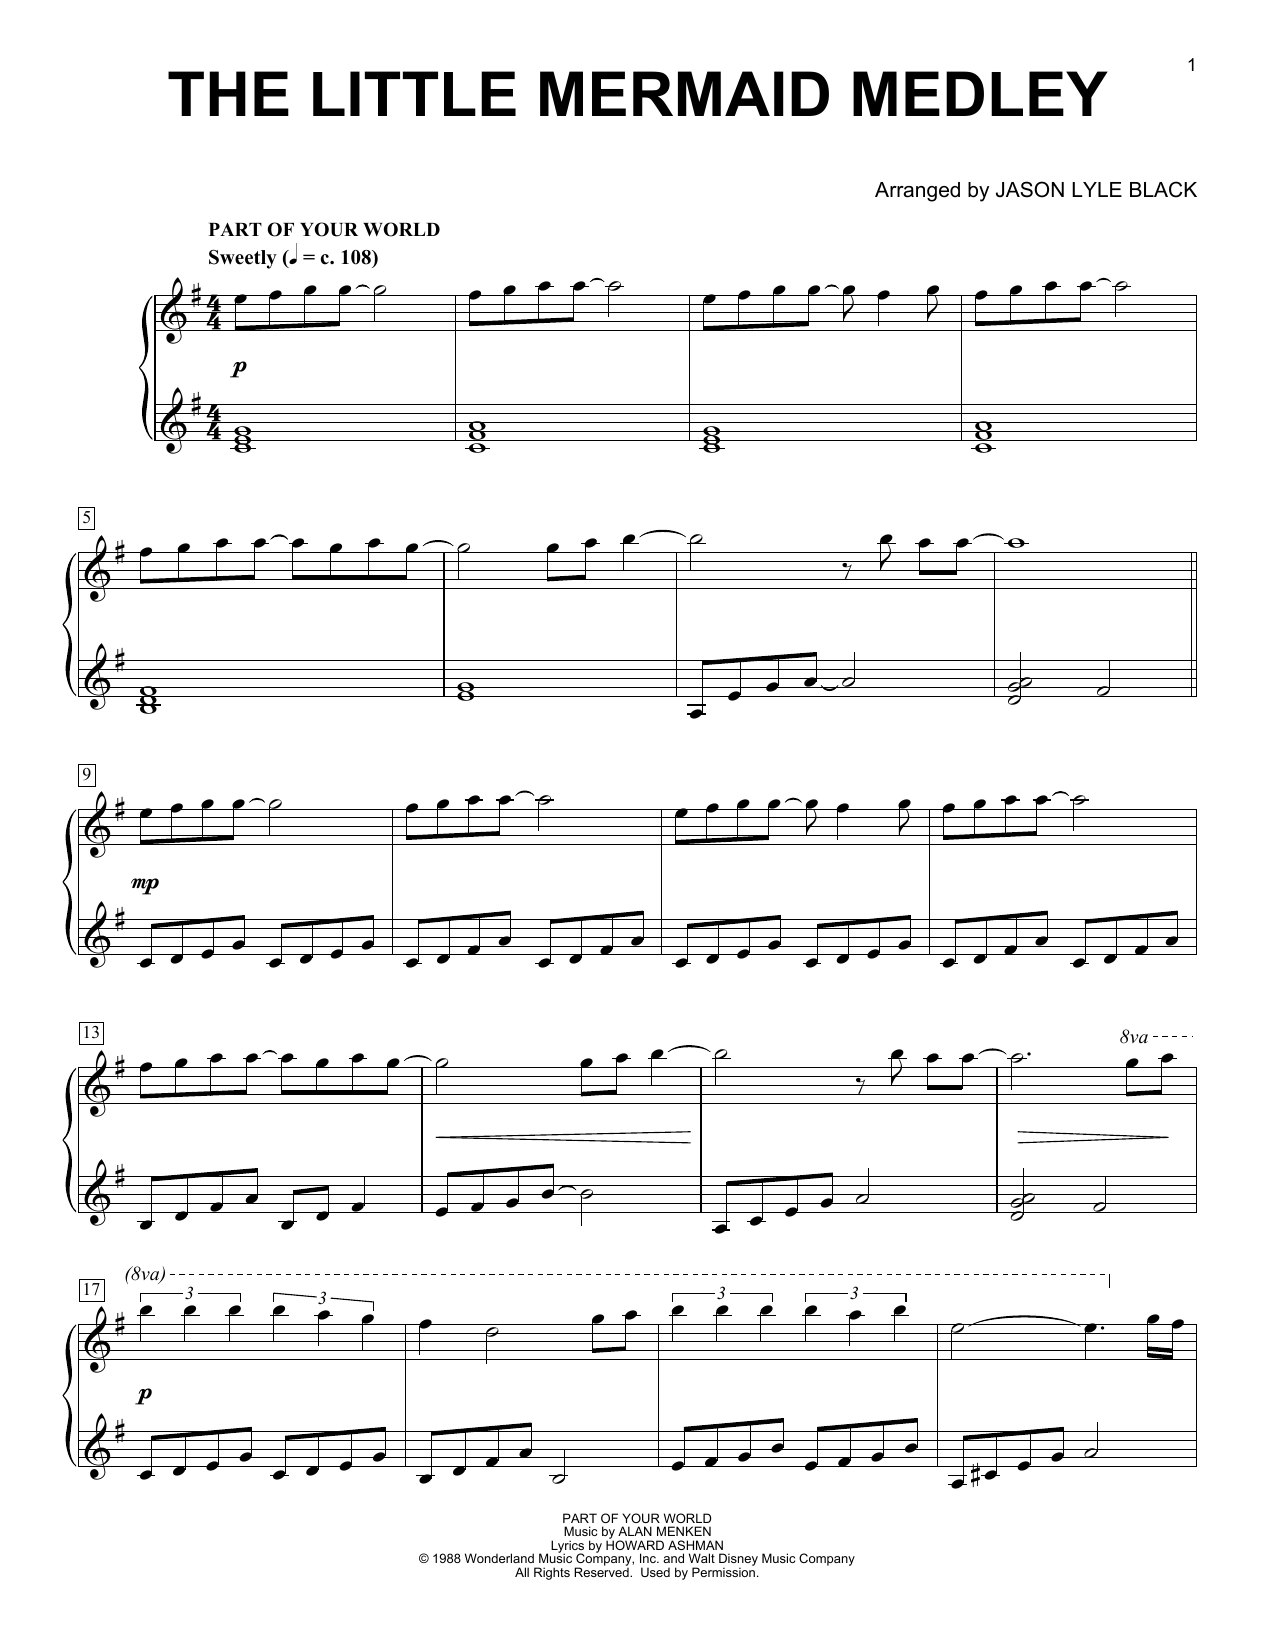 Alan Menken & Howard Ashman The Little Mermaid Medley (arr. Jason Lyle Black) Sheet Music Notes & Chords for Piano - Download or Print PDF